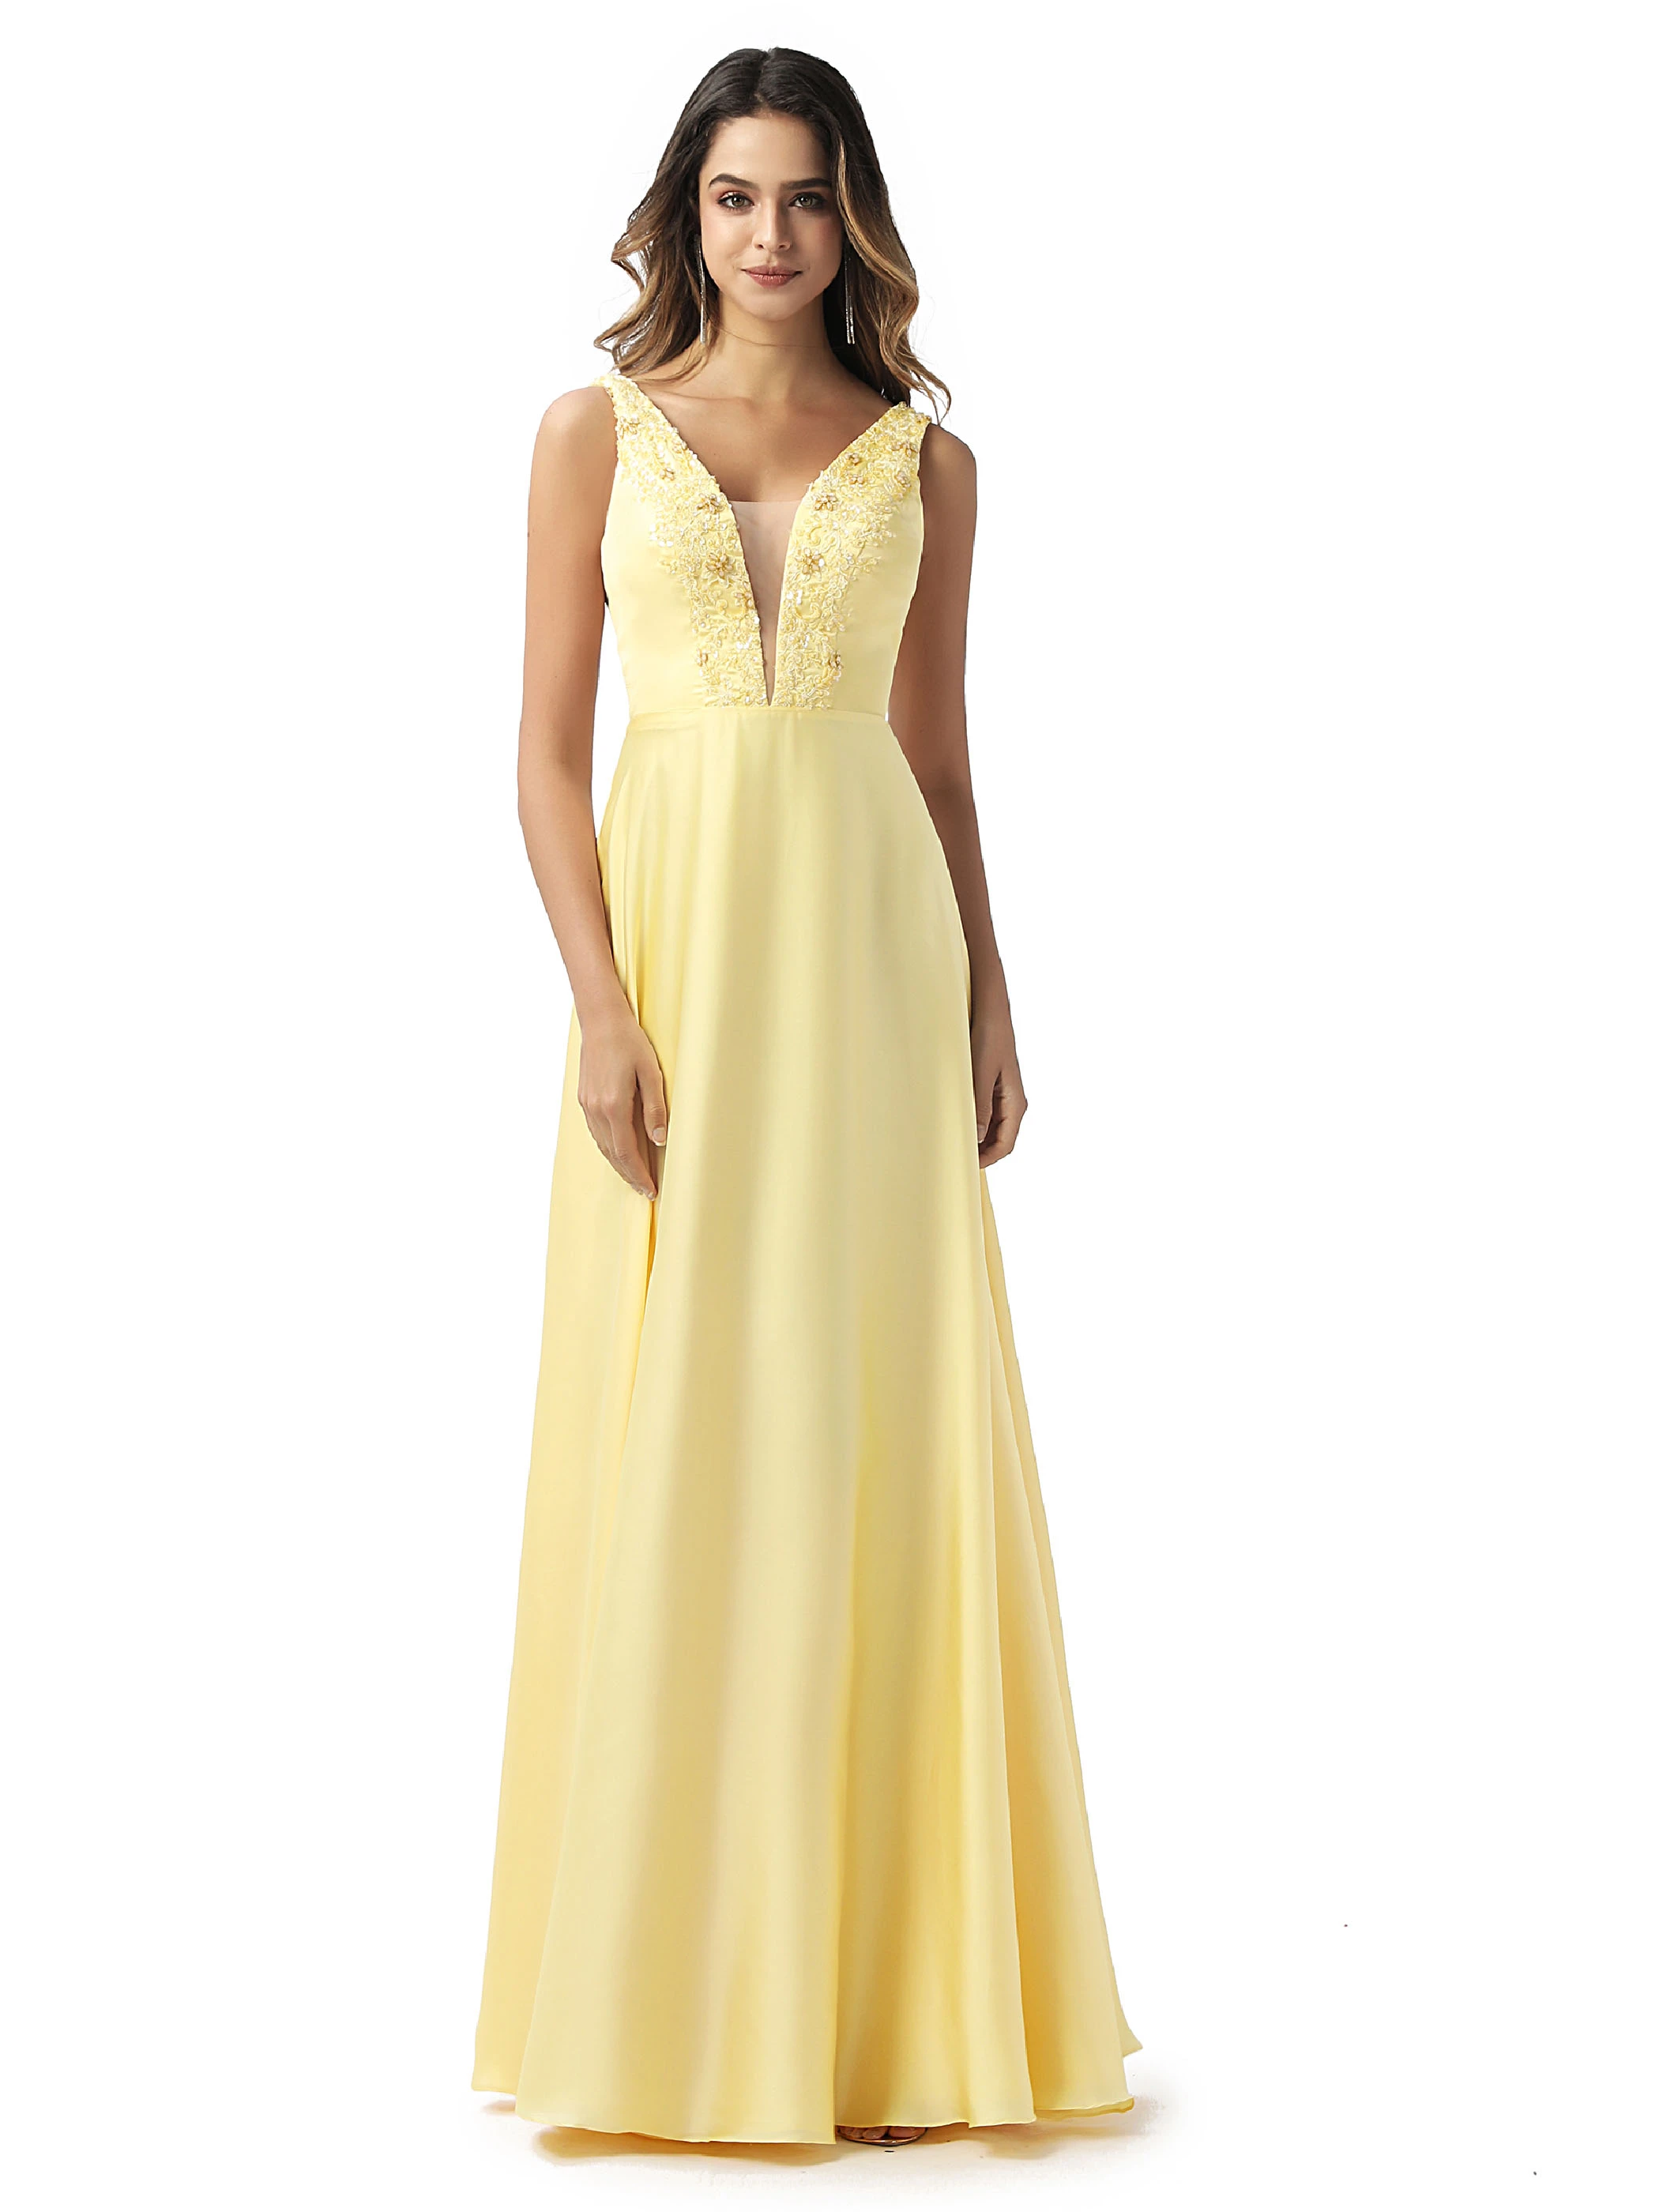 Dressv Elegant Daffodil Prom Dress V Neck A Line Sleeveless Floor Length Zipper Up Evening Party Formal Gowns Prom Dresses ball gown prom dresses